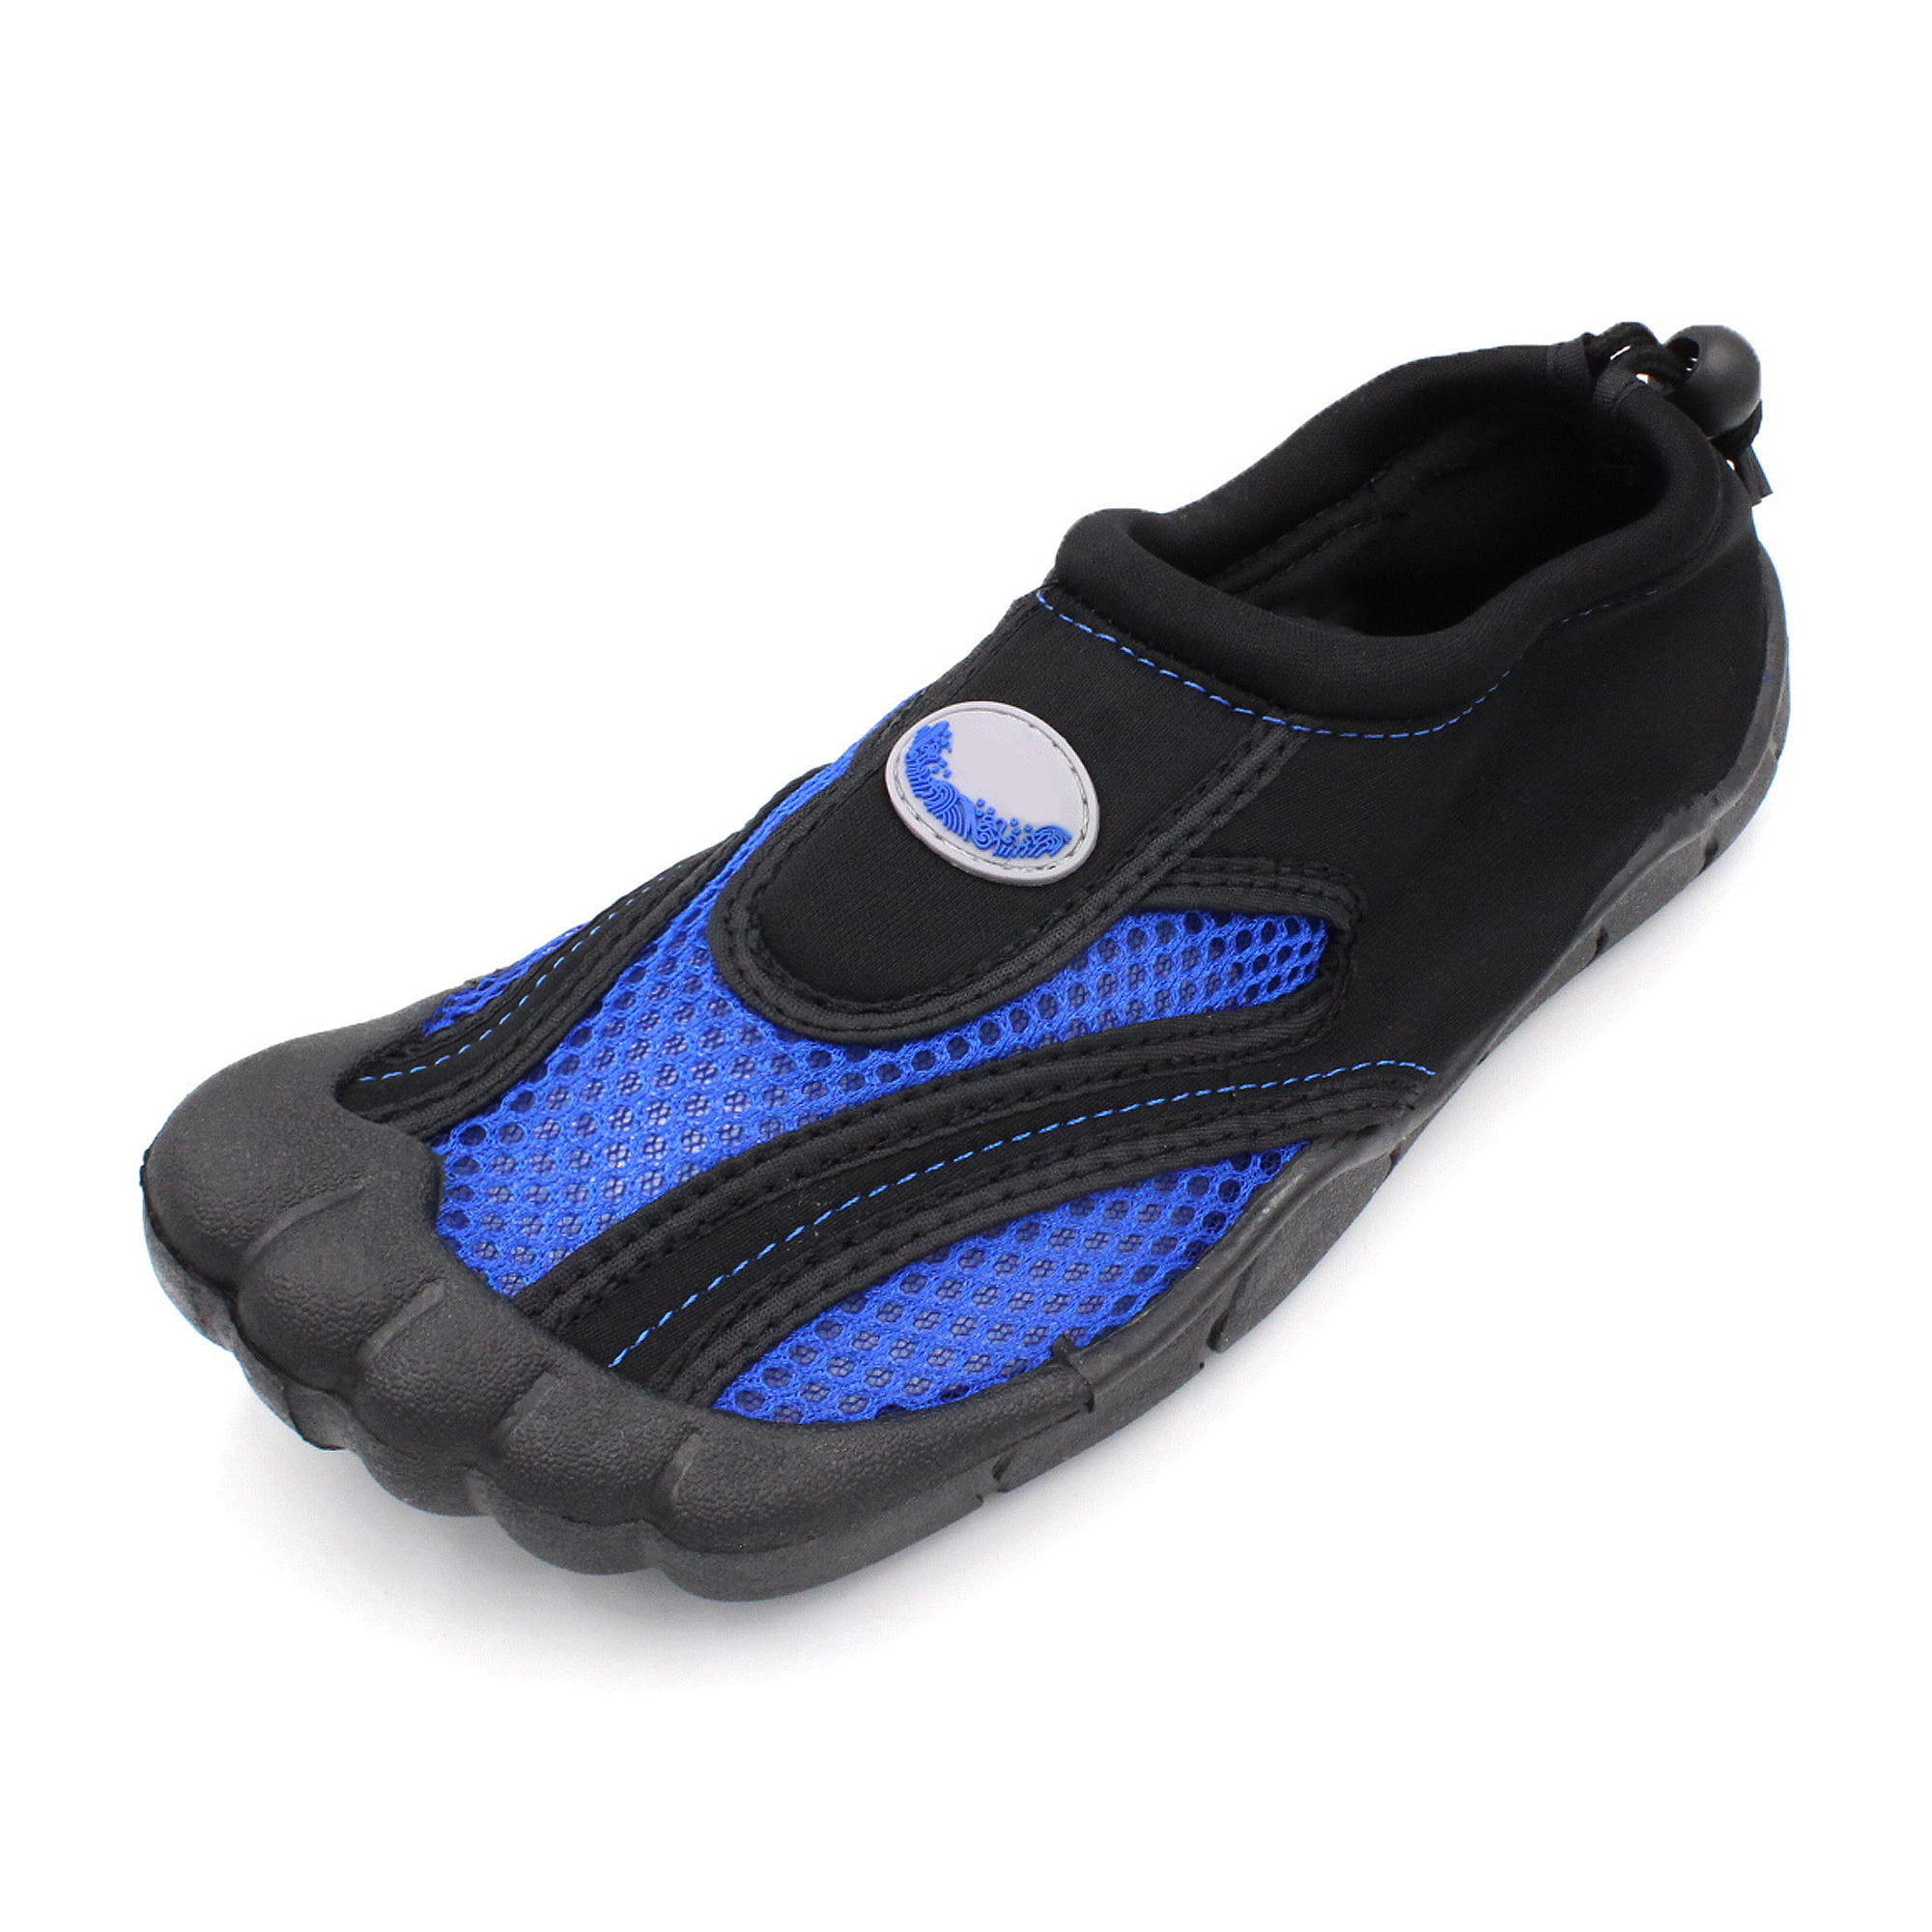 Men's Big Size Aqua Water Shoes Slip Resistant  Beach Pool Skin Shoe New 